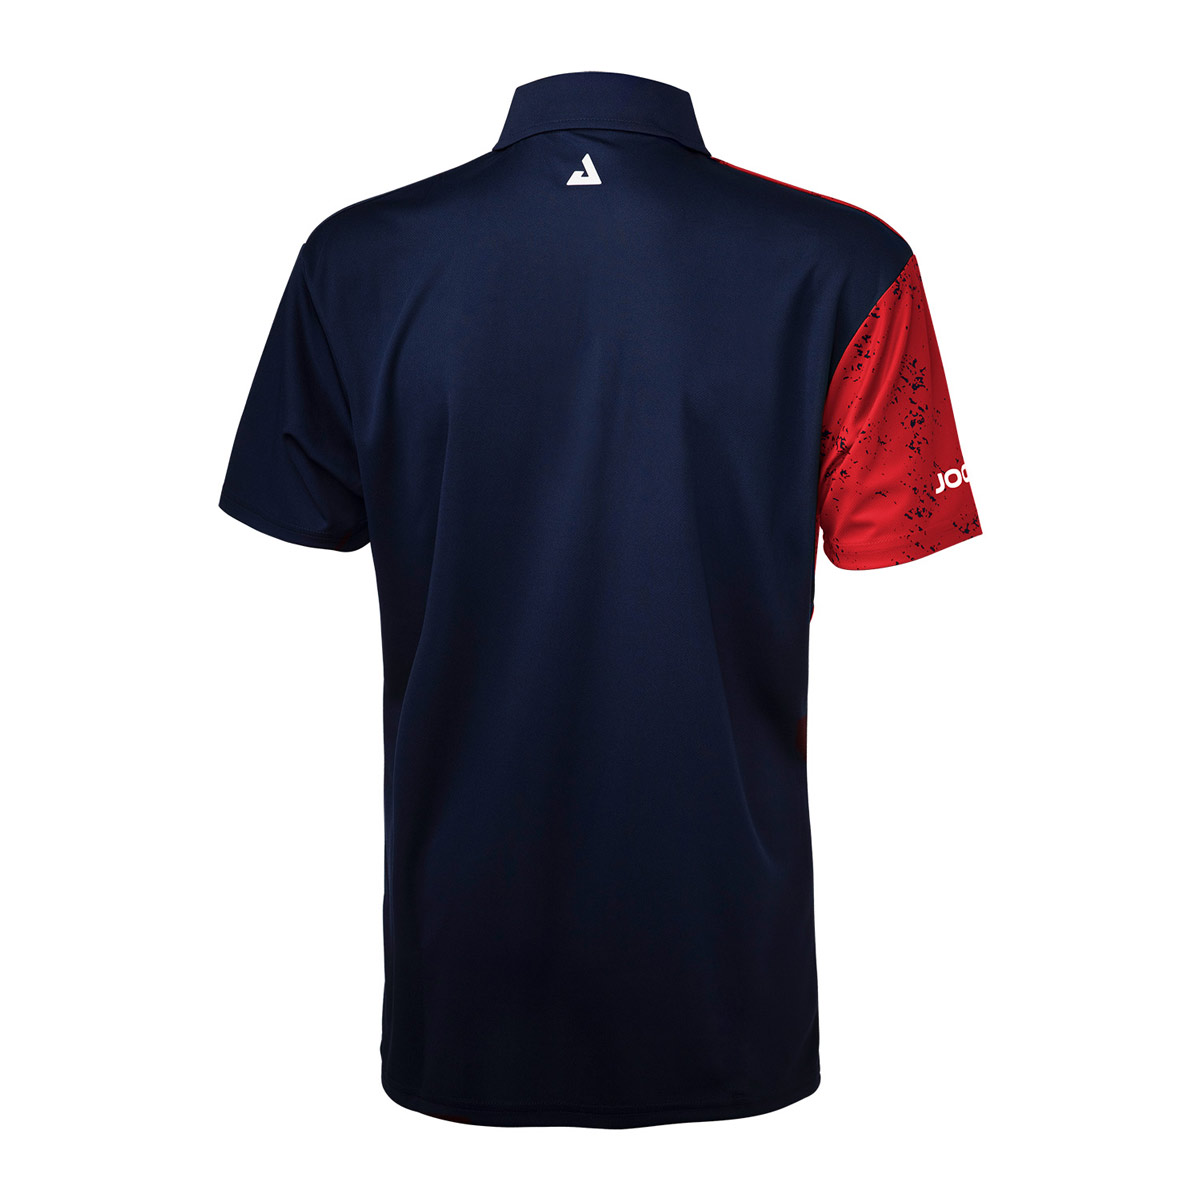 JOOLA Shirt Sygma navy/red S